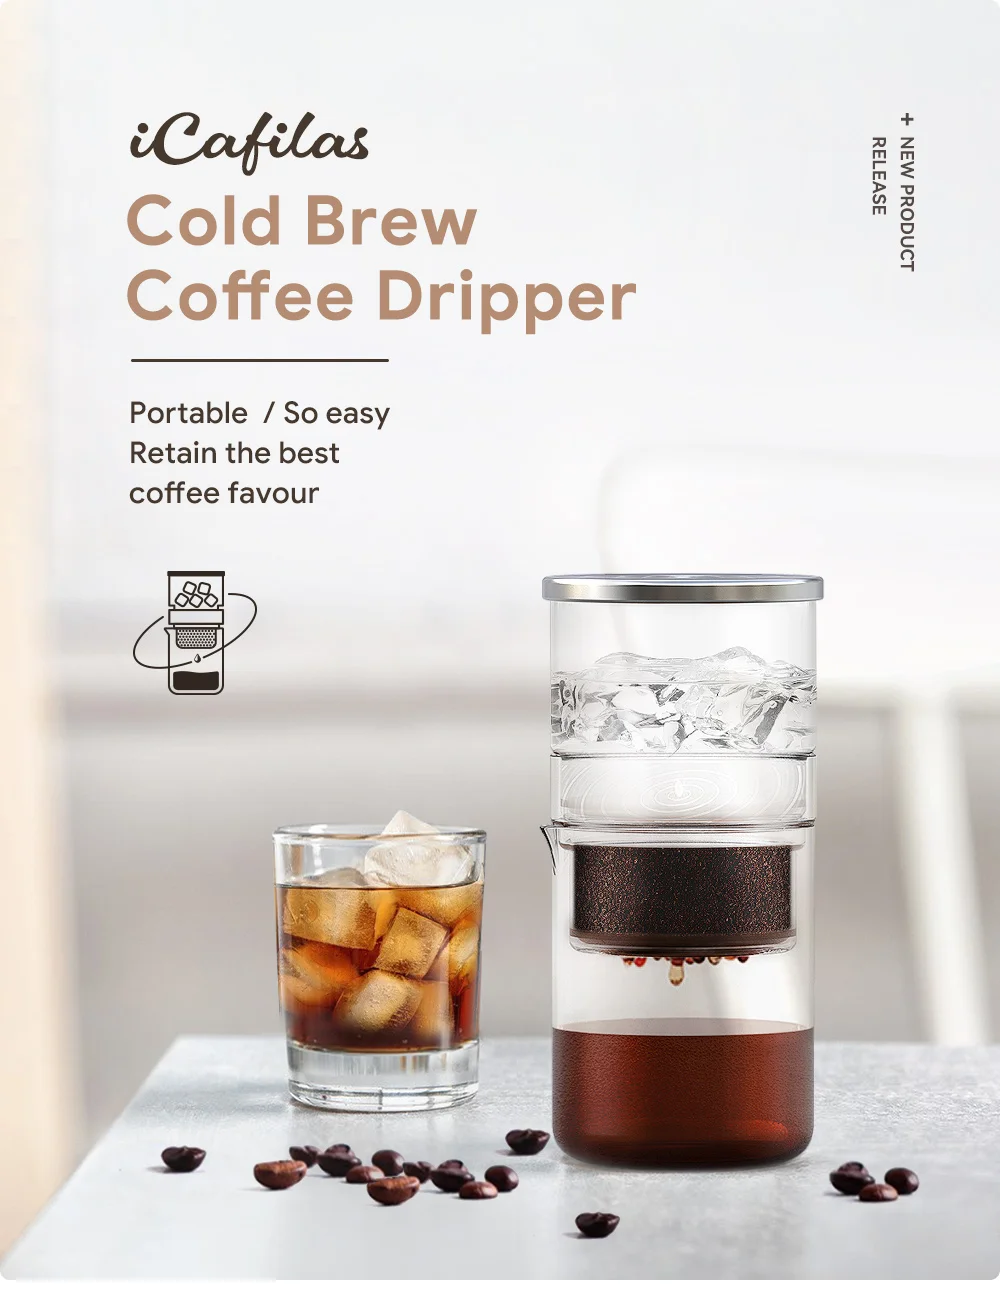 Cold Brew Coffee Maker 300ml Premium Iced Coffee Maker, Glass Cold Brew Iced Coffee Maker with Stainless Steel Mesh Filter